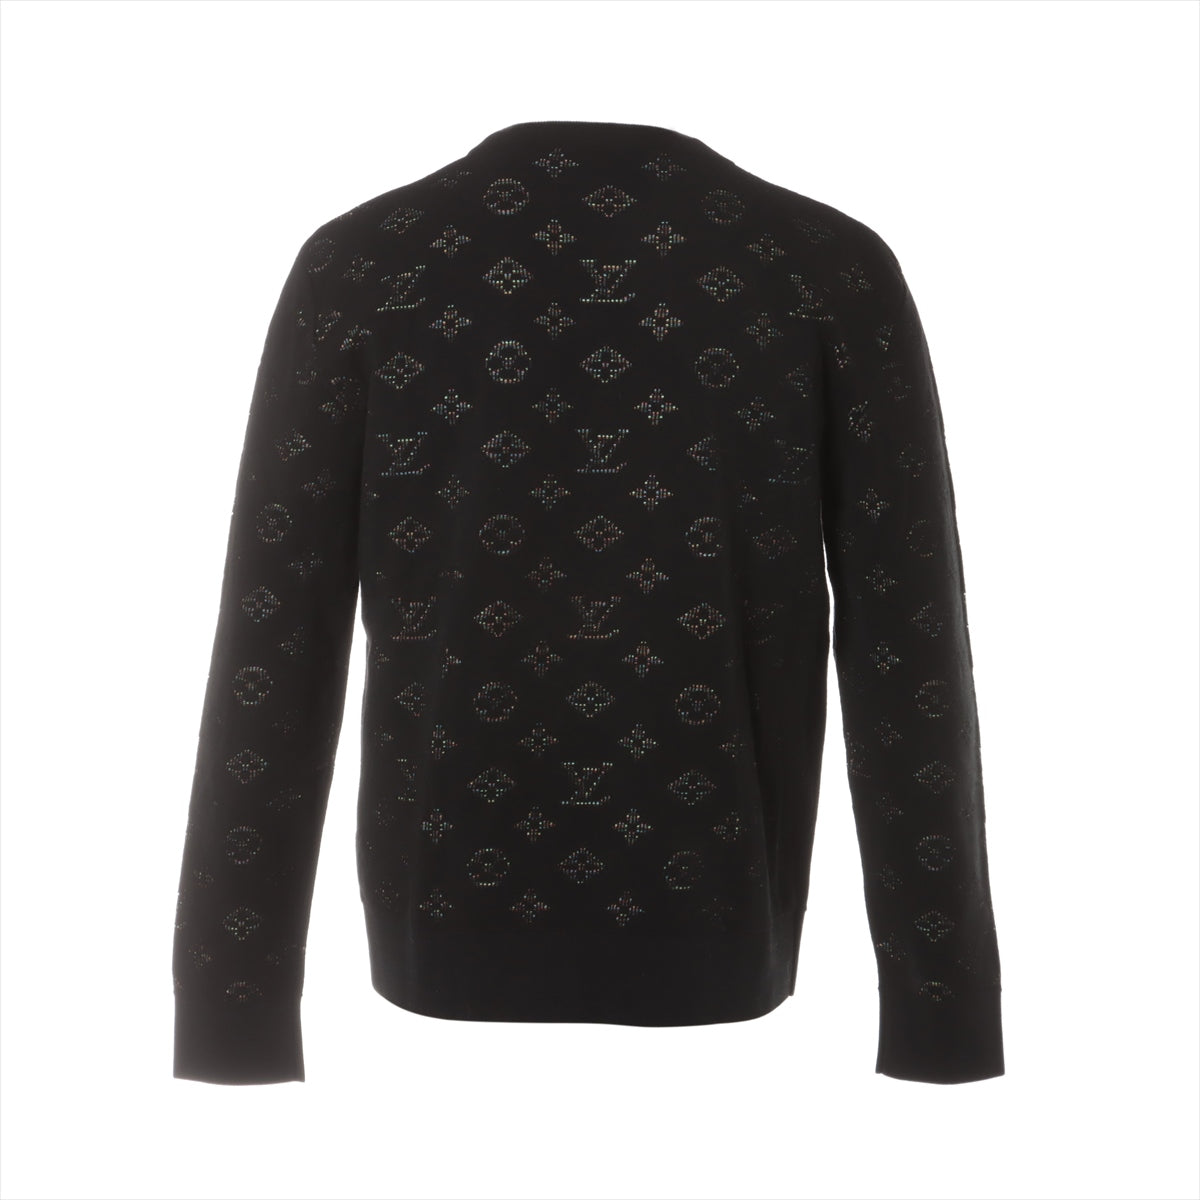 Louis Vuitton 20SS Cotton & rayon Knit S Men's Black  RM201Q monogram jacquard